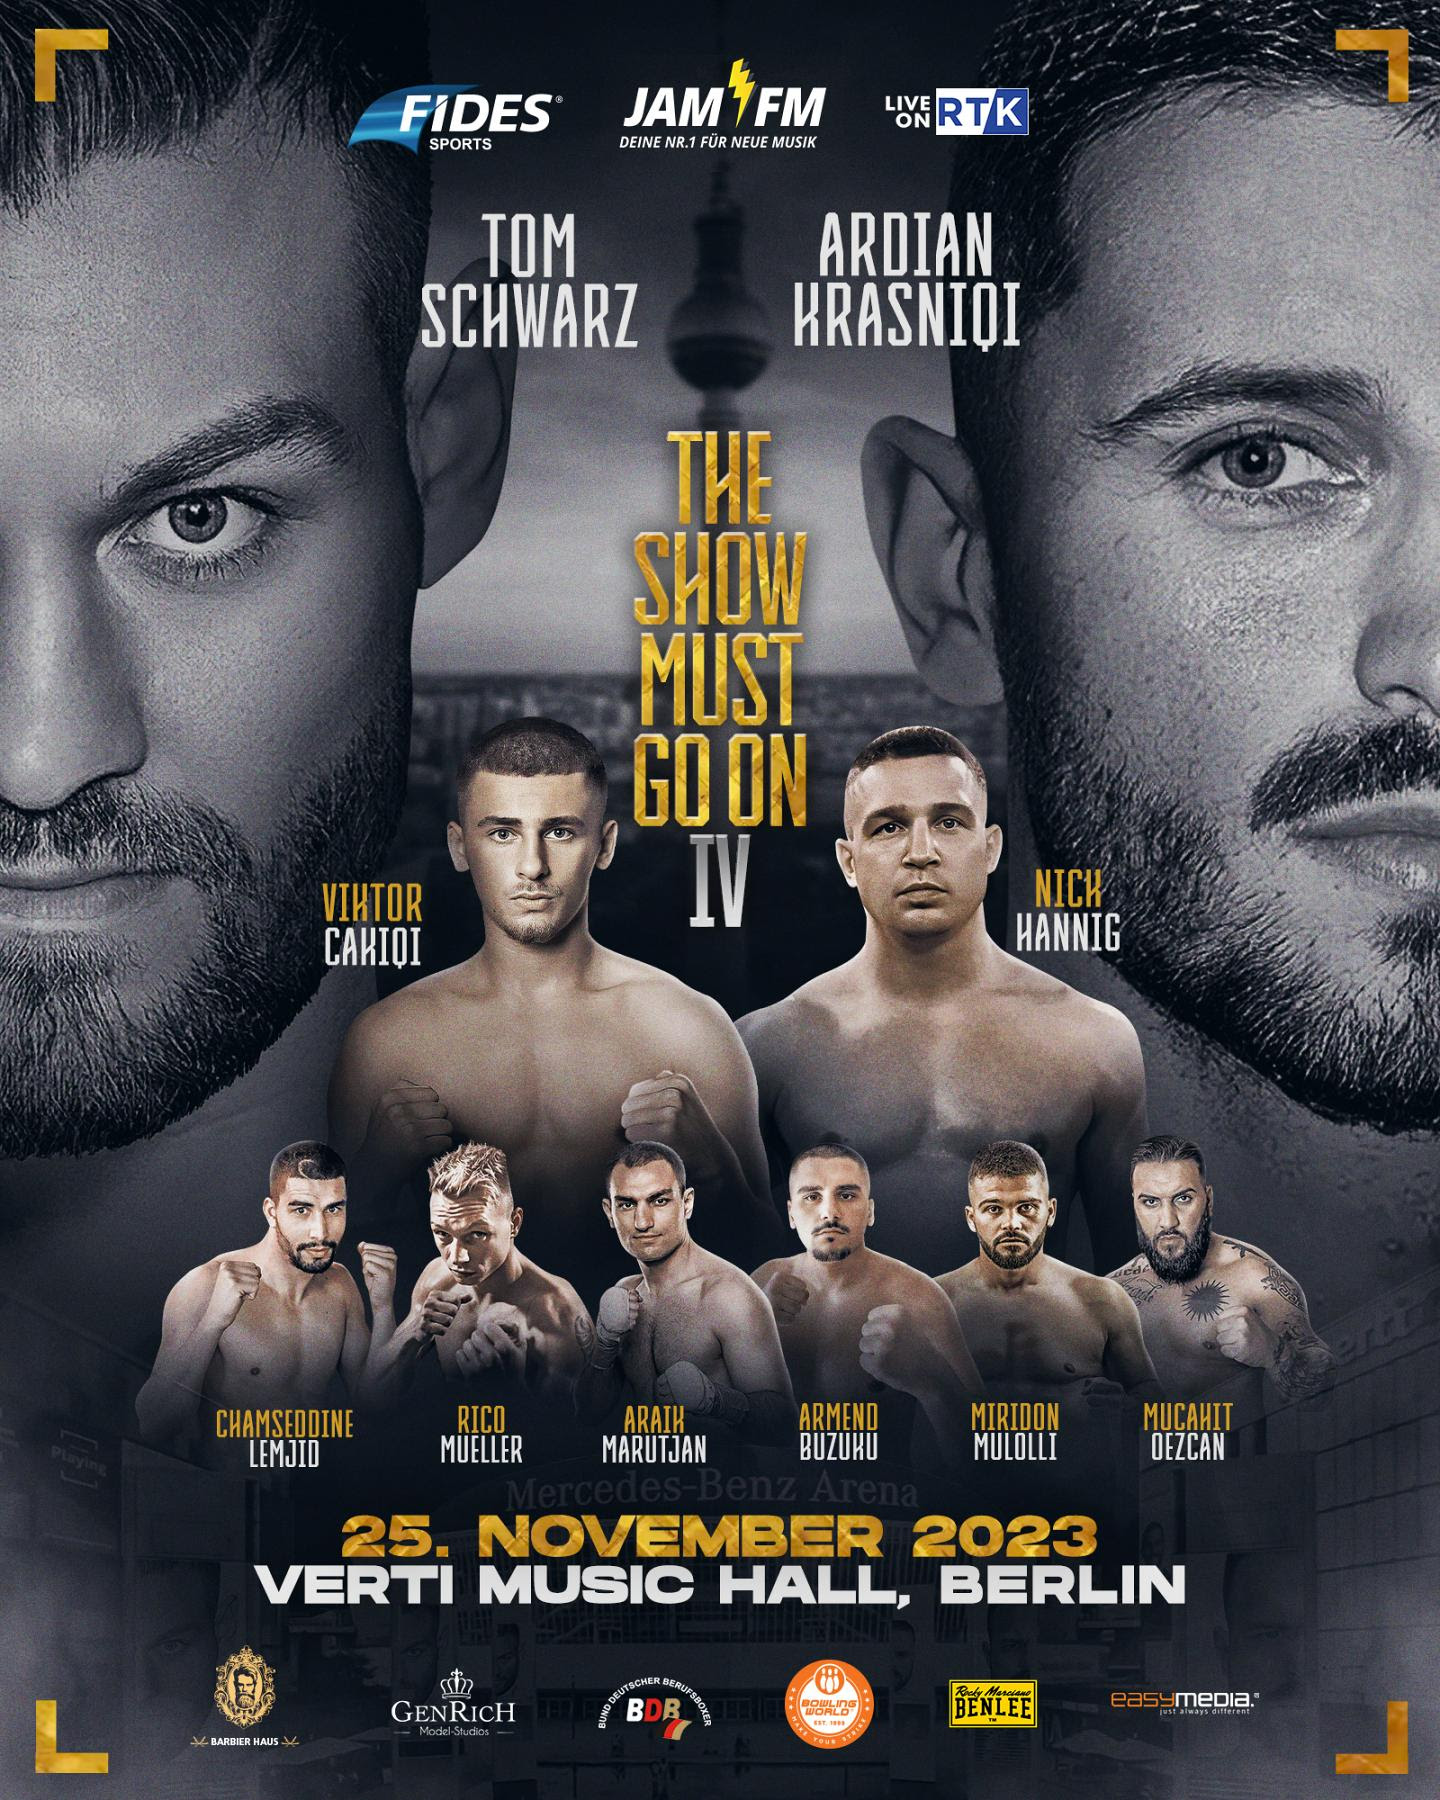 Plakat Boxevent "The Show must go on IV" mit mehreren Boxern